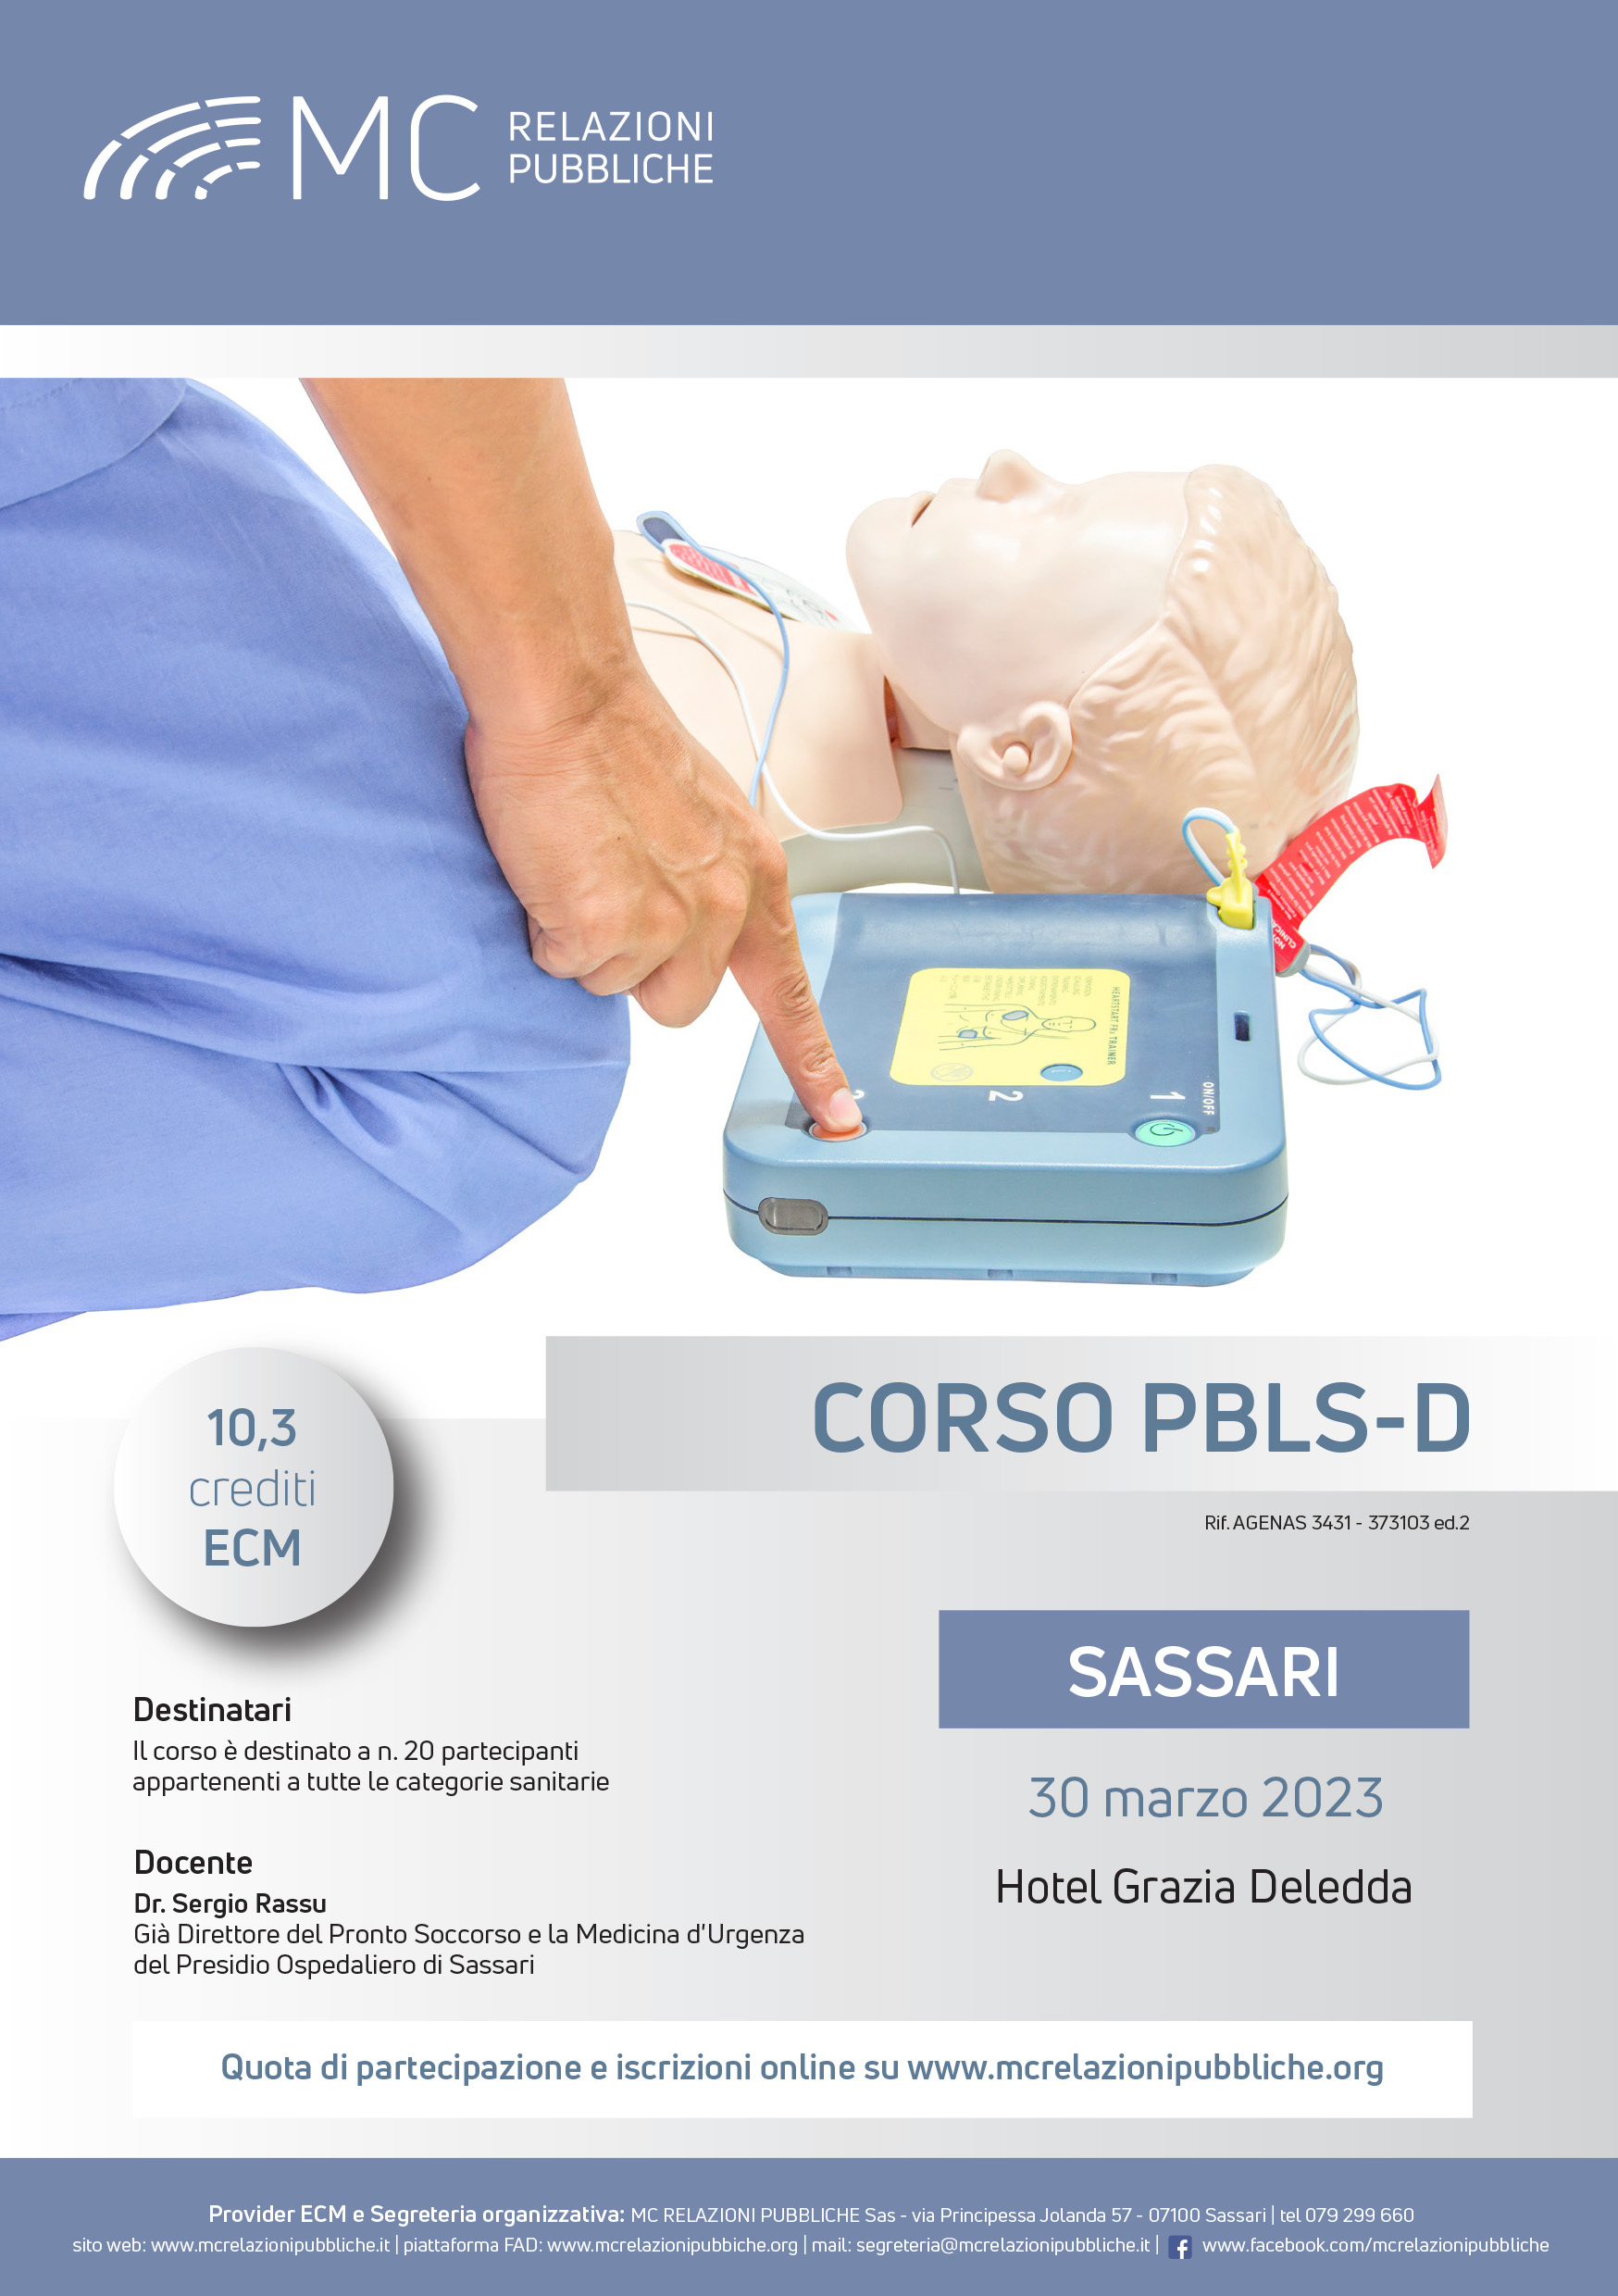 Corso PBLS-D. Pediatric Basic life support-defibrillation ed.2